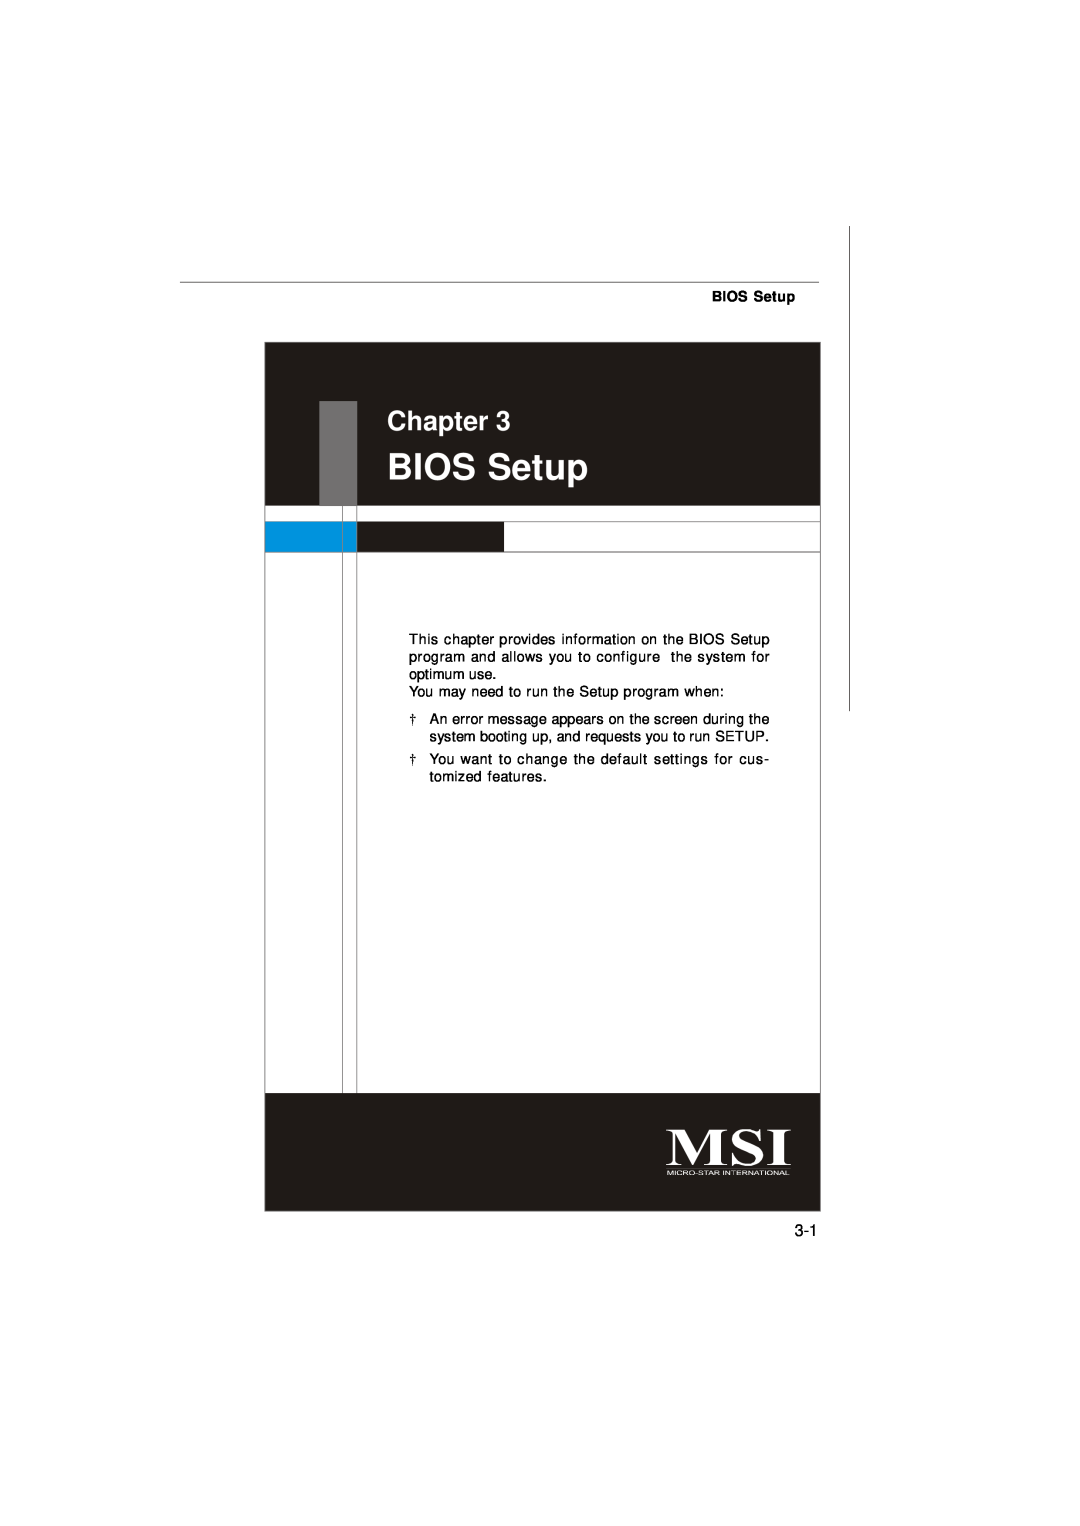 Nvidia MS-7374 manual BIOS Setup, Chapter 